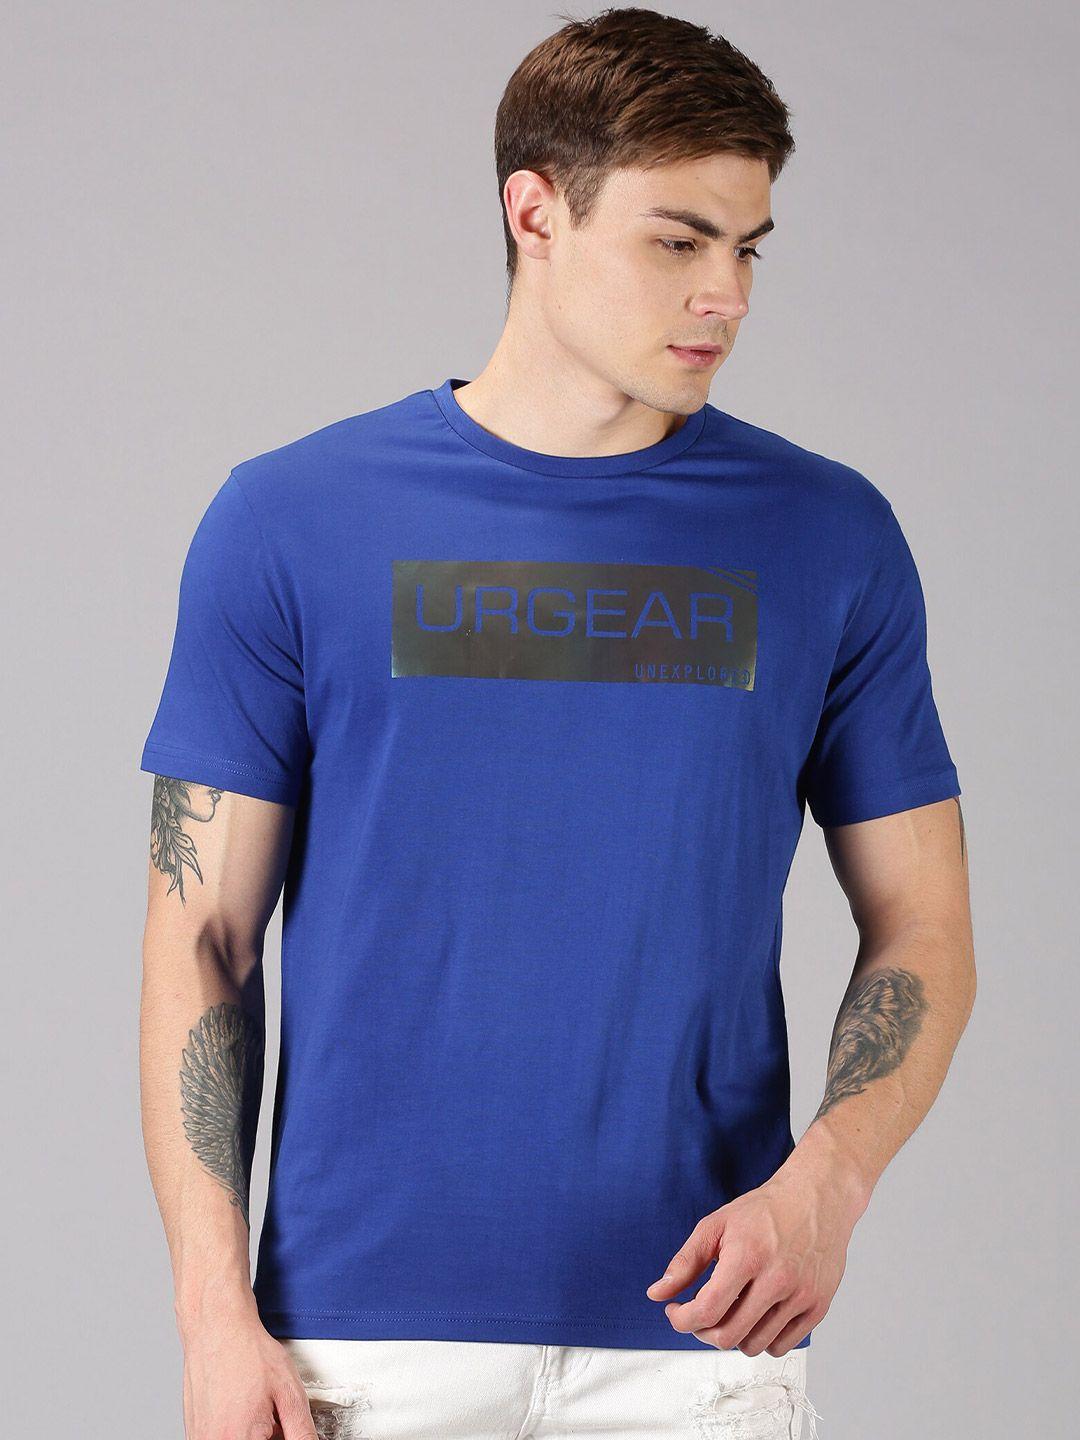 urgear-men-blue-typography-printed-applique-t-shirt